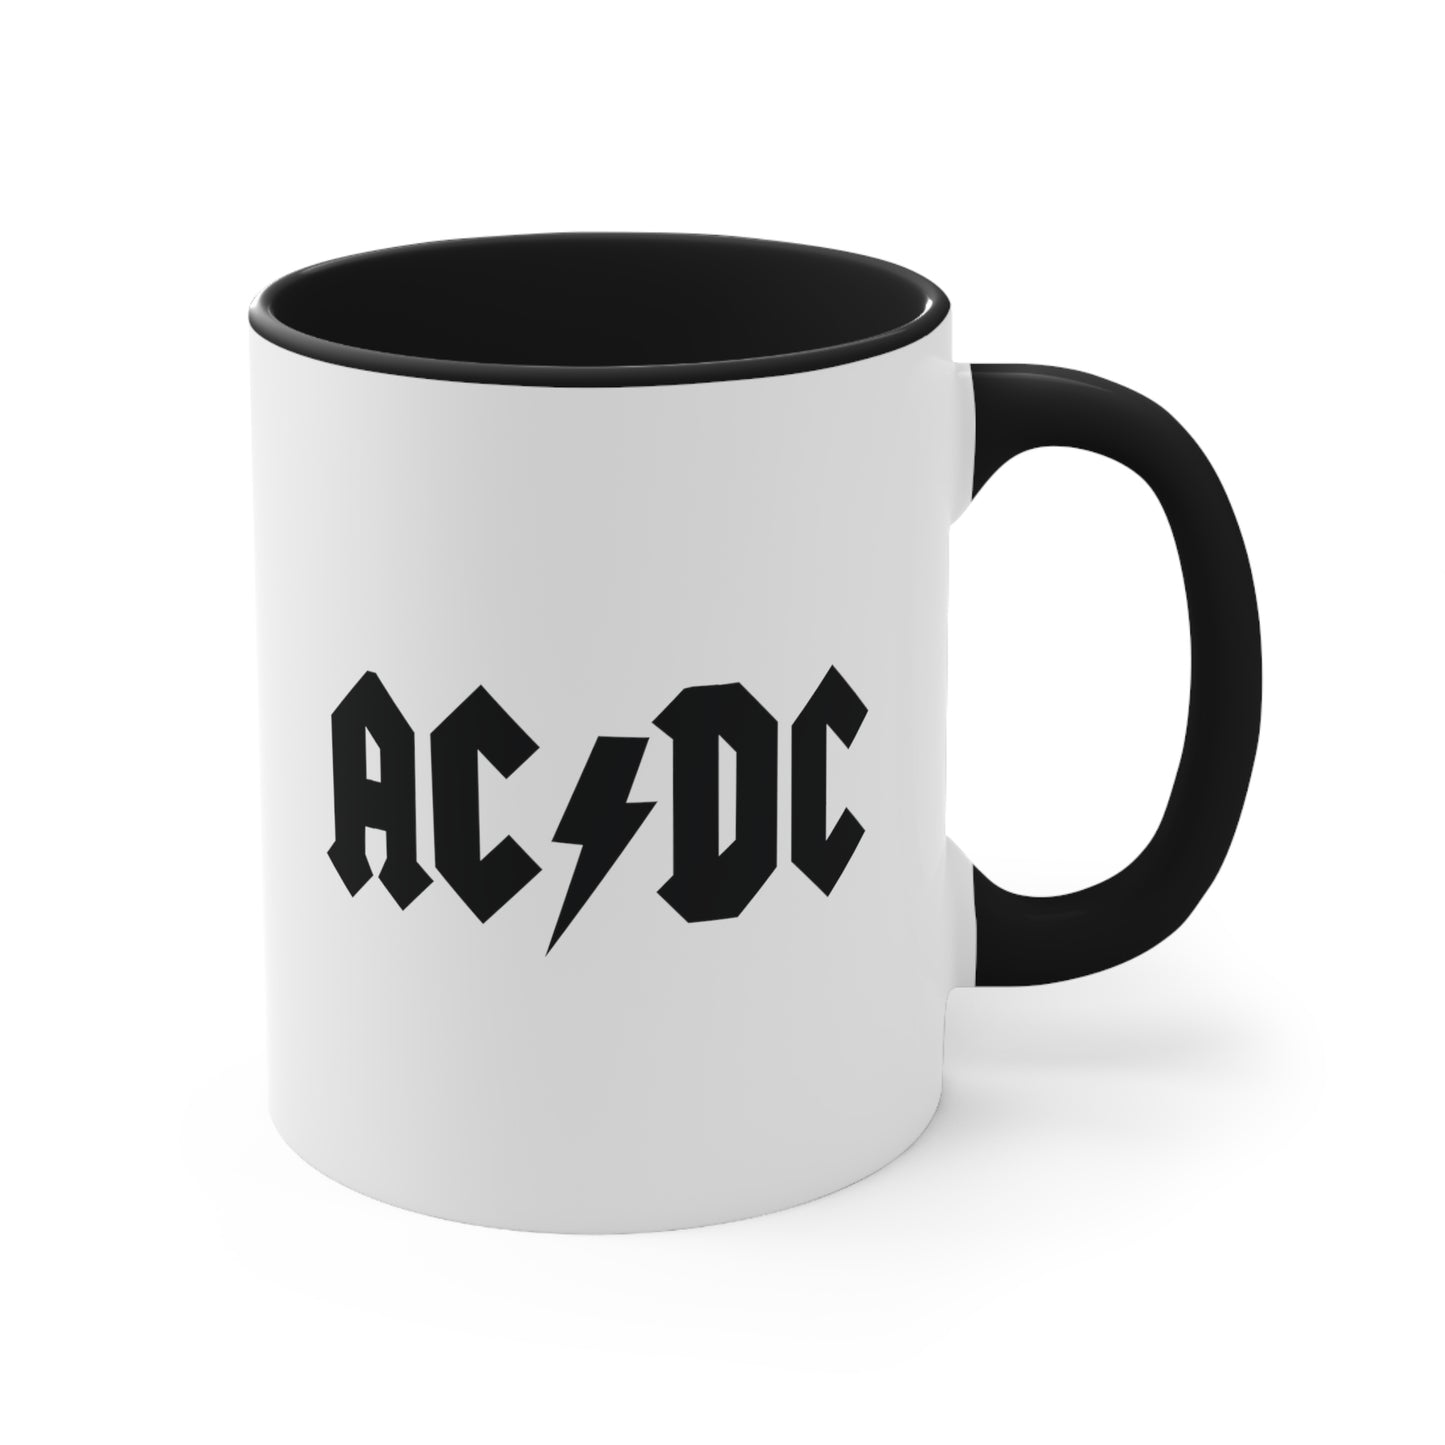 AC/DC Coffee Mug - Double Sided Black Accent White Ceramic 11oz by TheGlassyLass